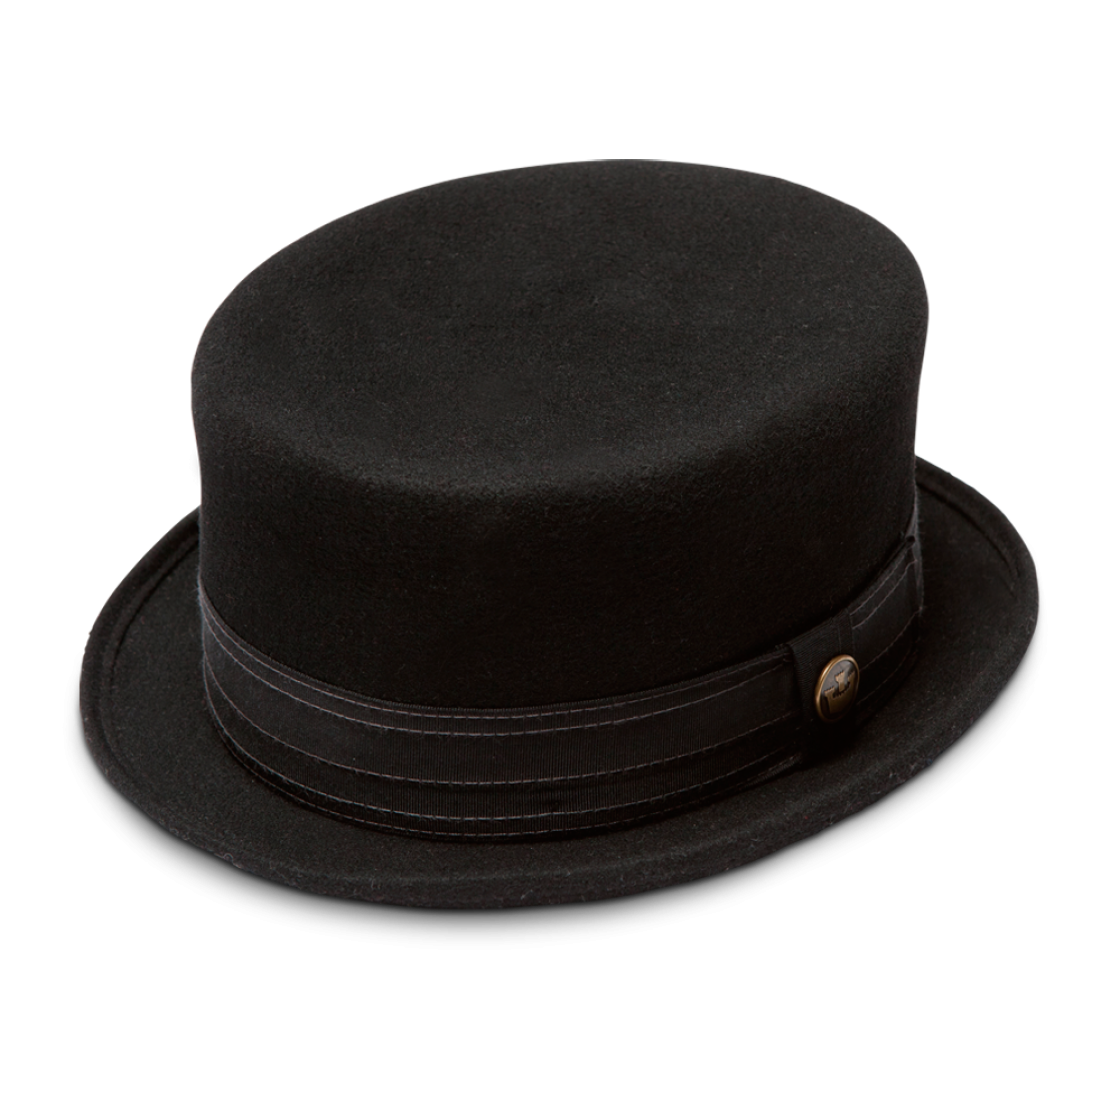 Magic Black Hat PNG Transparent Image